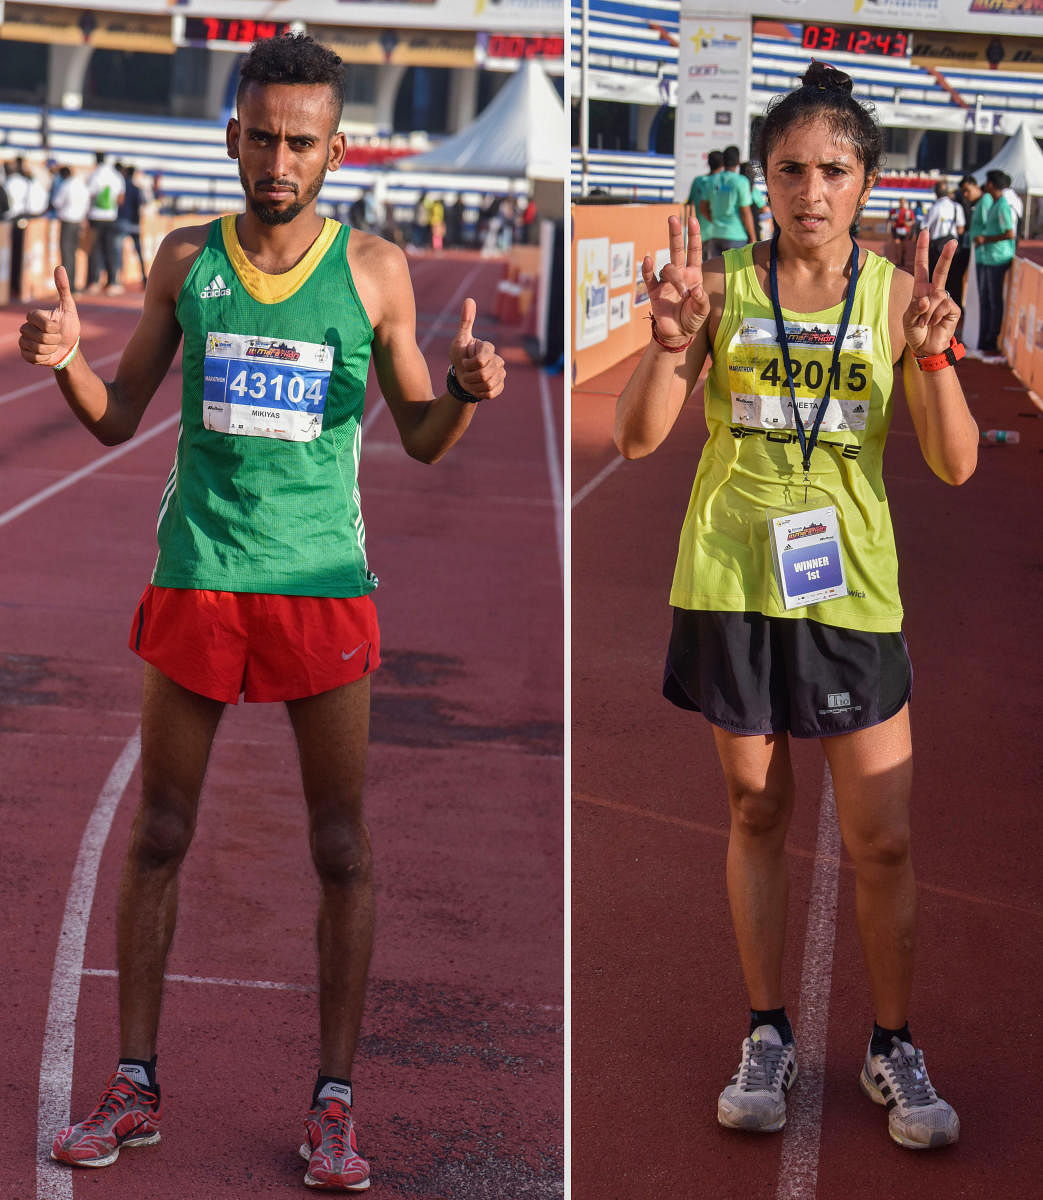 VICTORIOUS Ethiopia’s Mikiyas Yemata (left) and Aneeta Chaudhary of India won the men’s and women’s titles respectively in the Bengaluru Marathon at the Sree Kanteerava Stadium on Sunday. DH Photo/ S K Dinesh